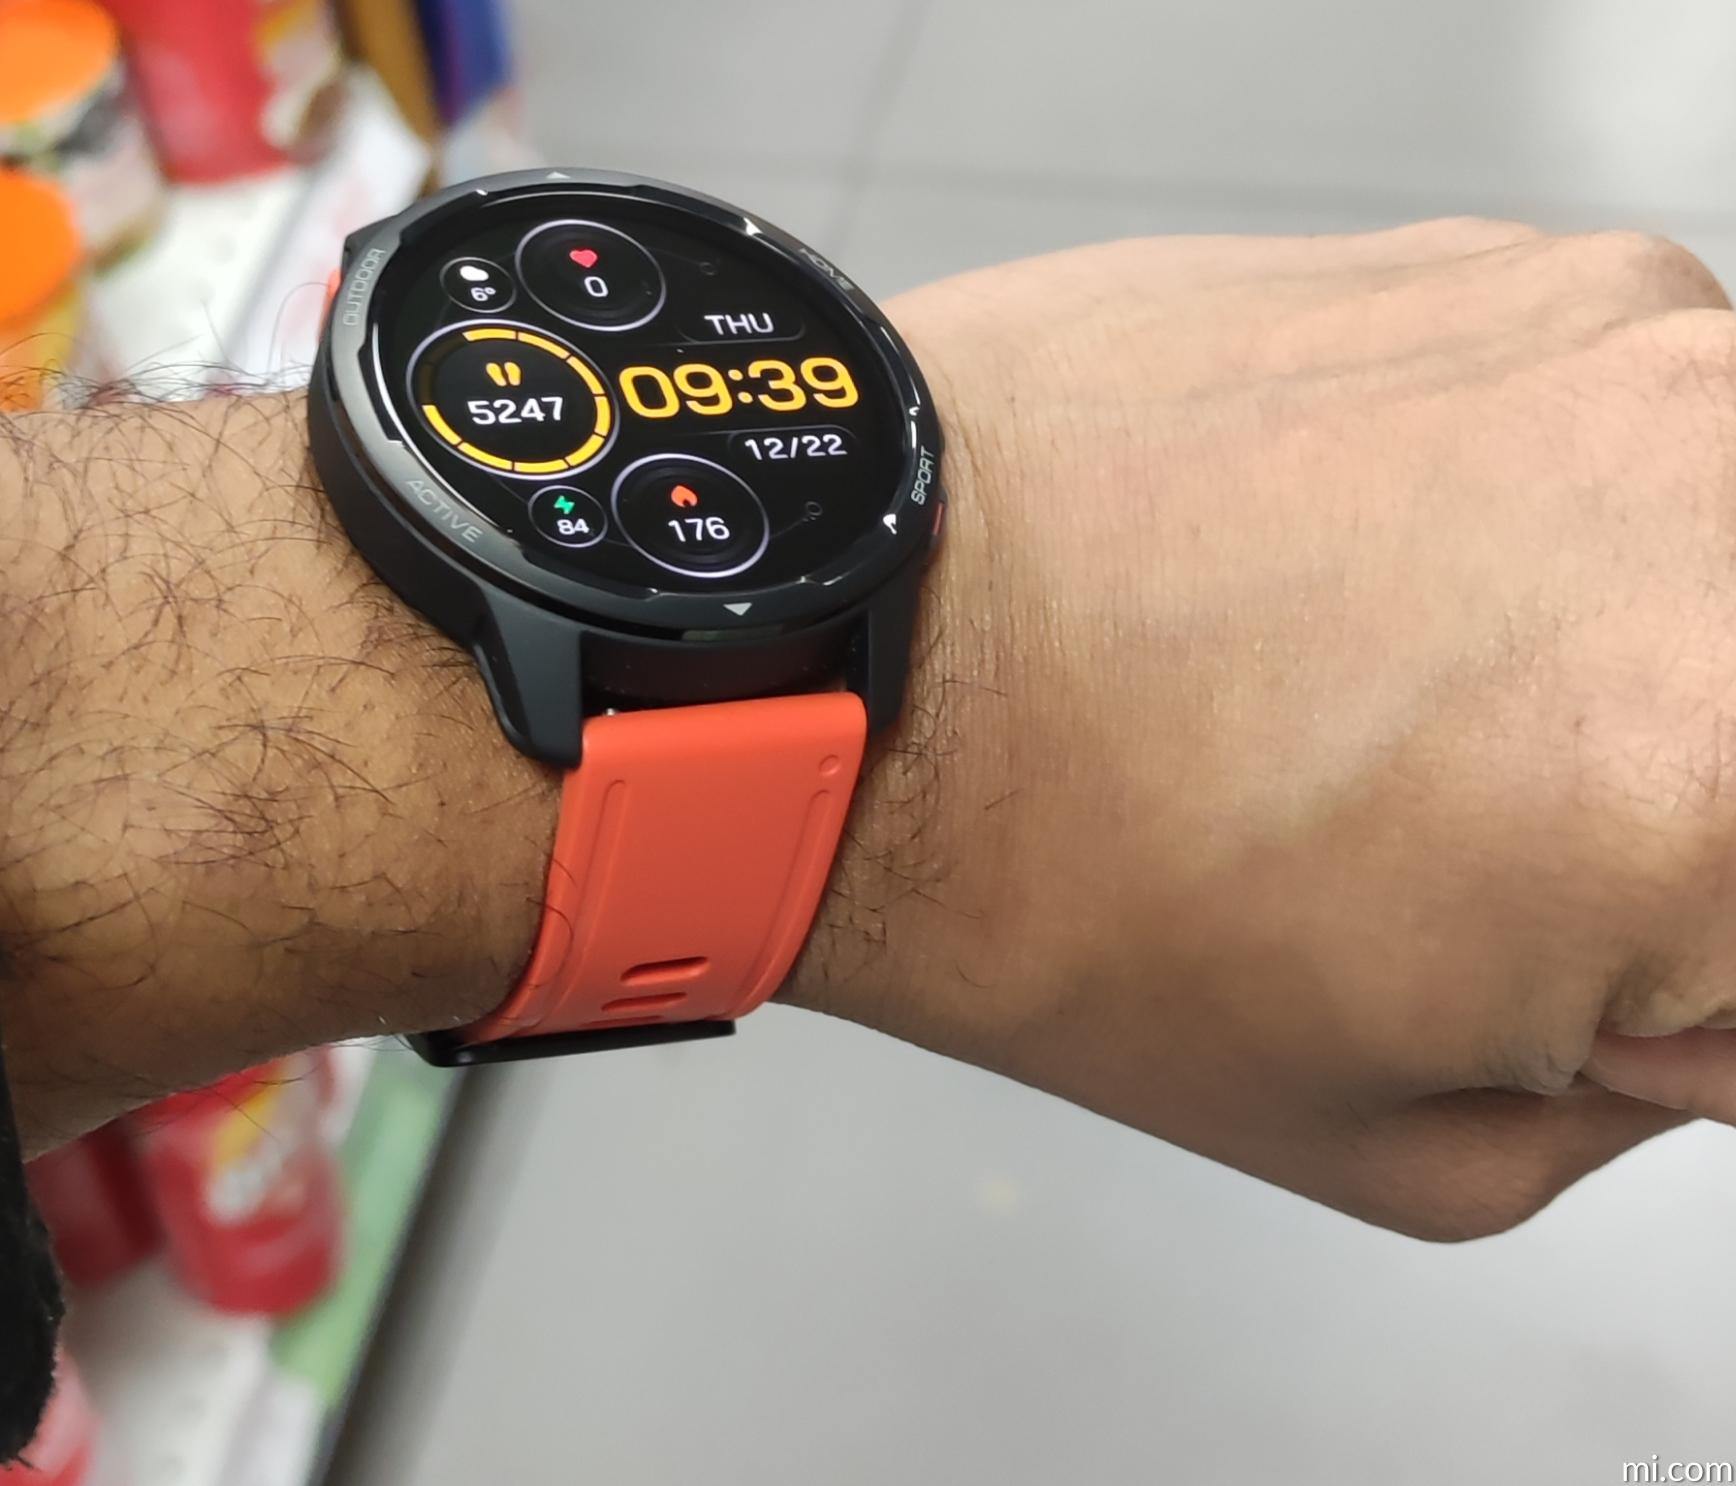 Xiaomi Watch S1 Active Smartwatch Review